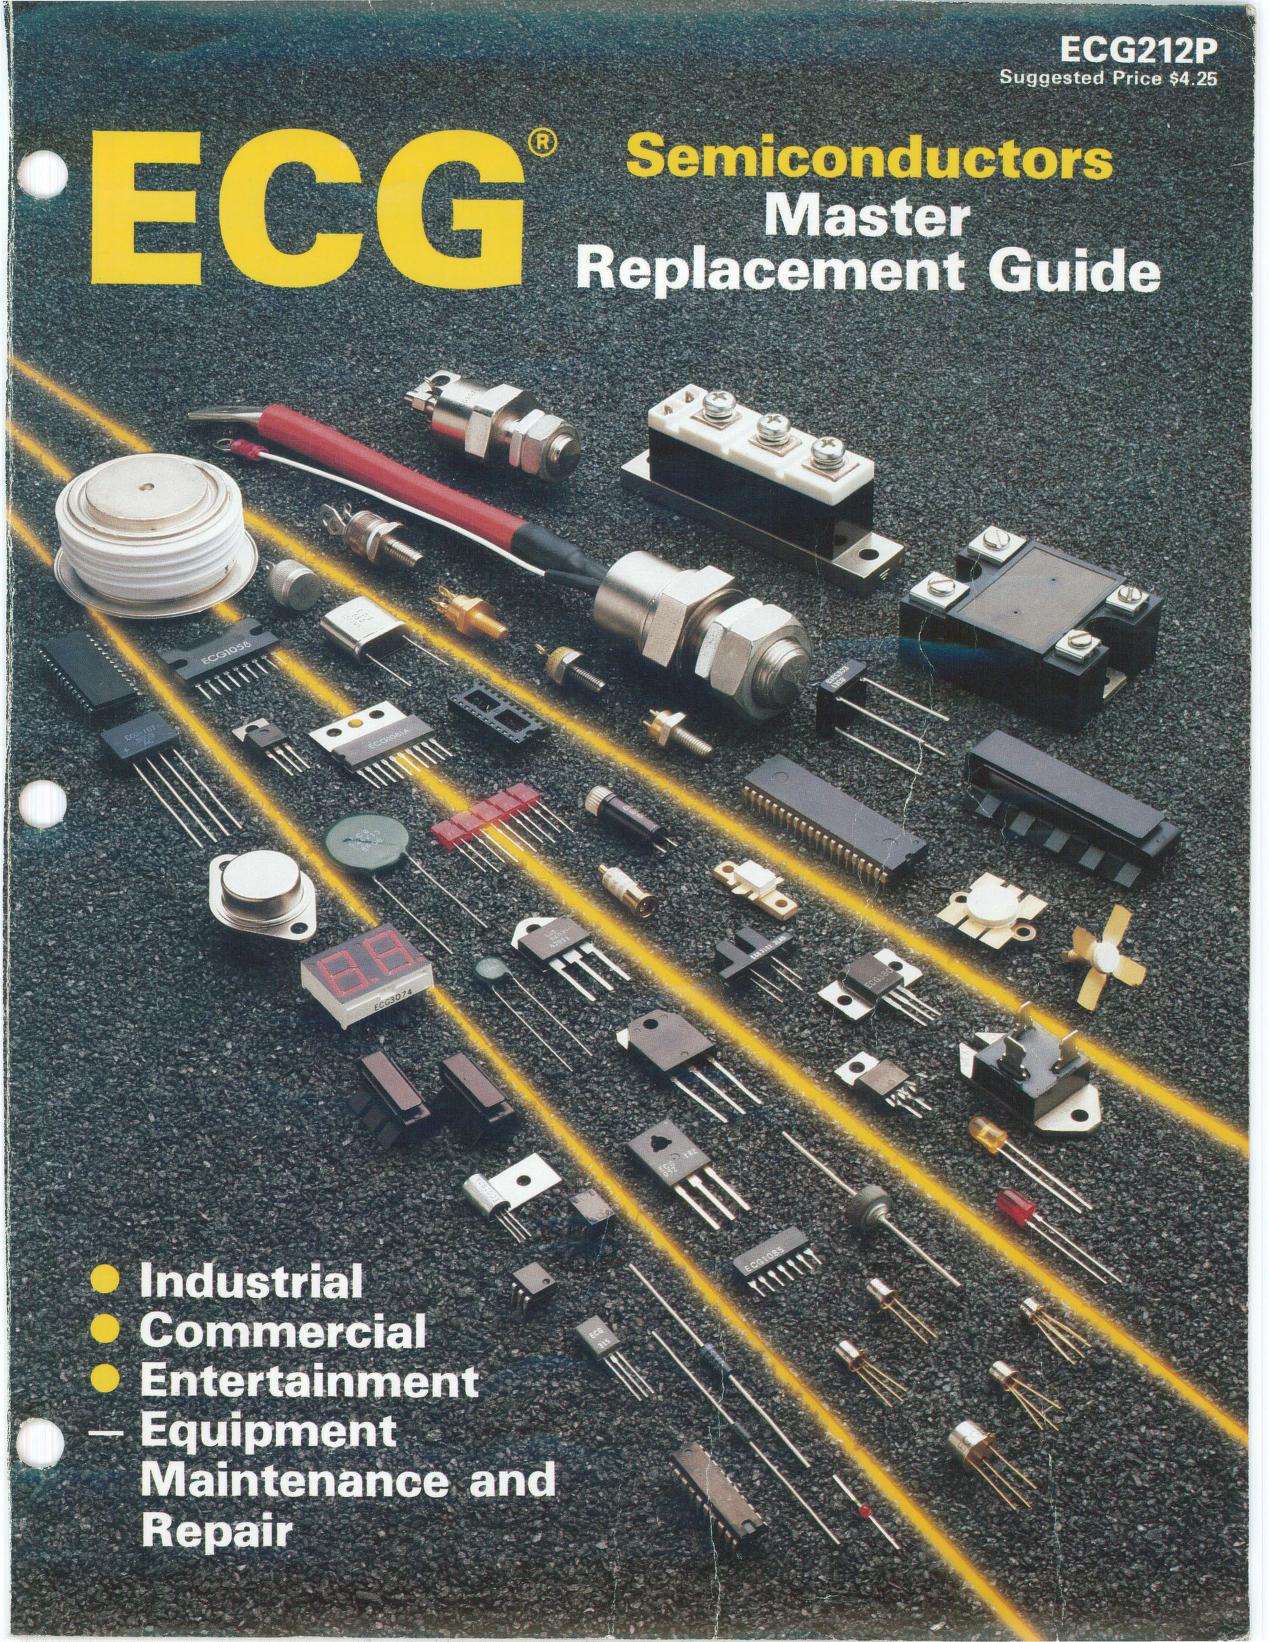 ecg master replacement guide pdf free download